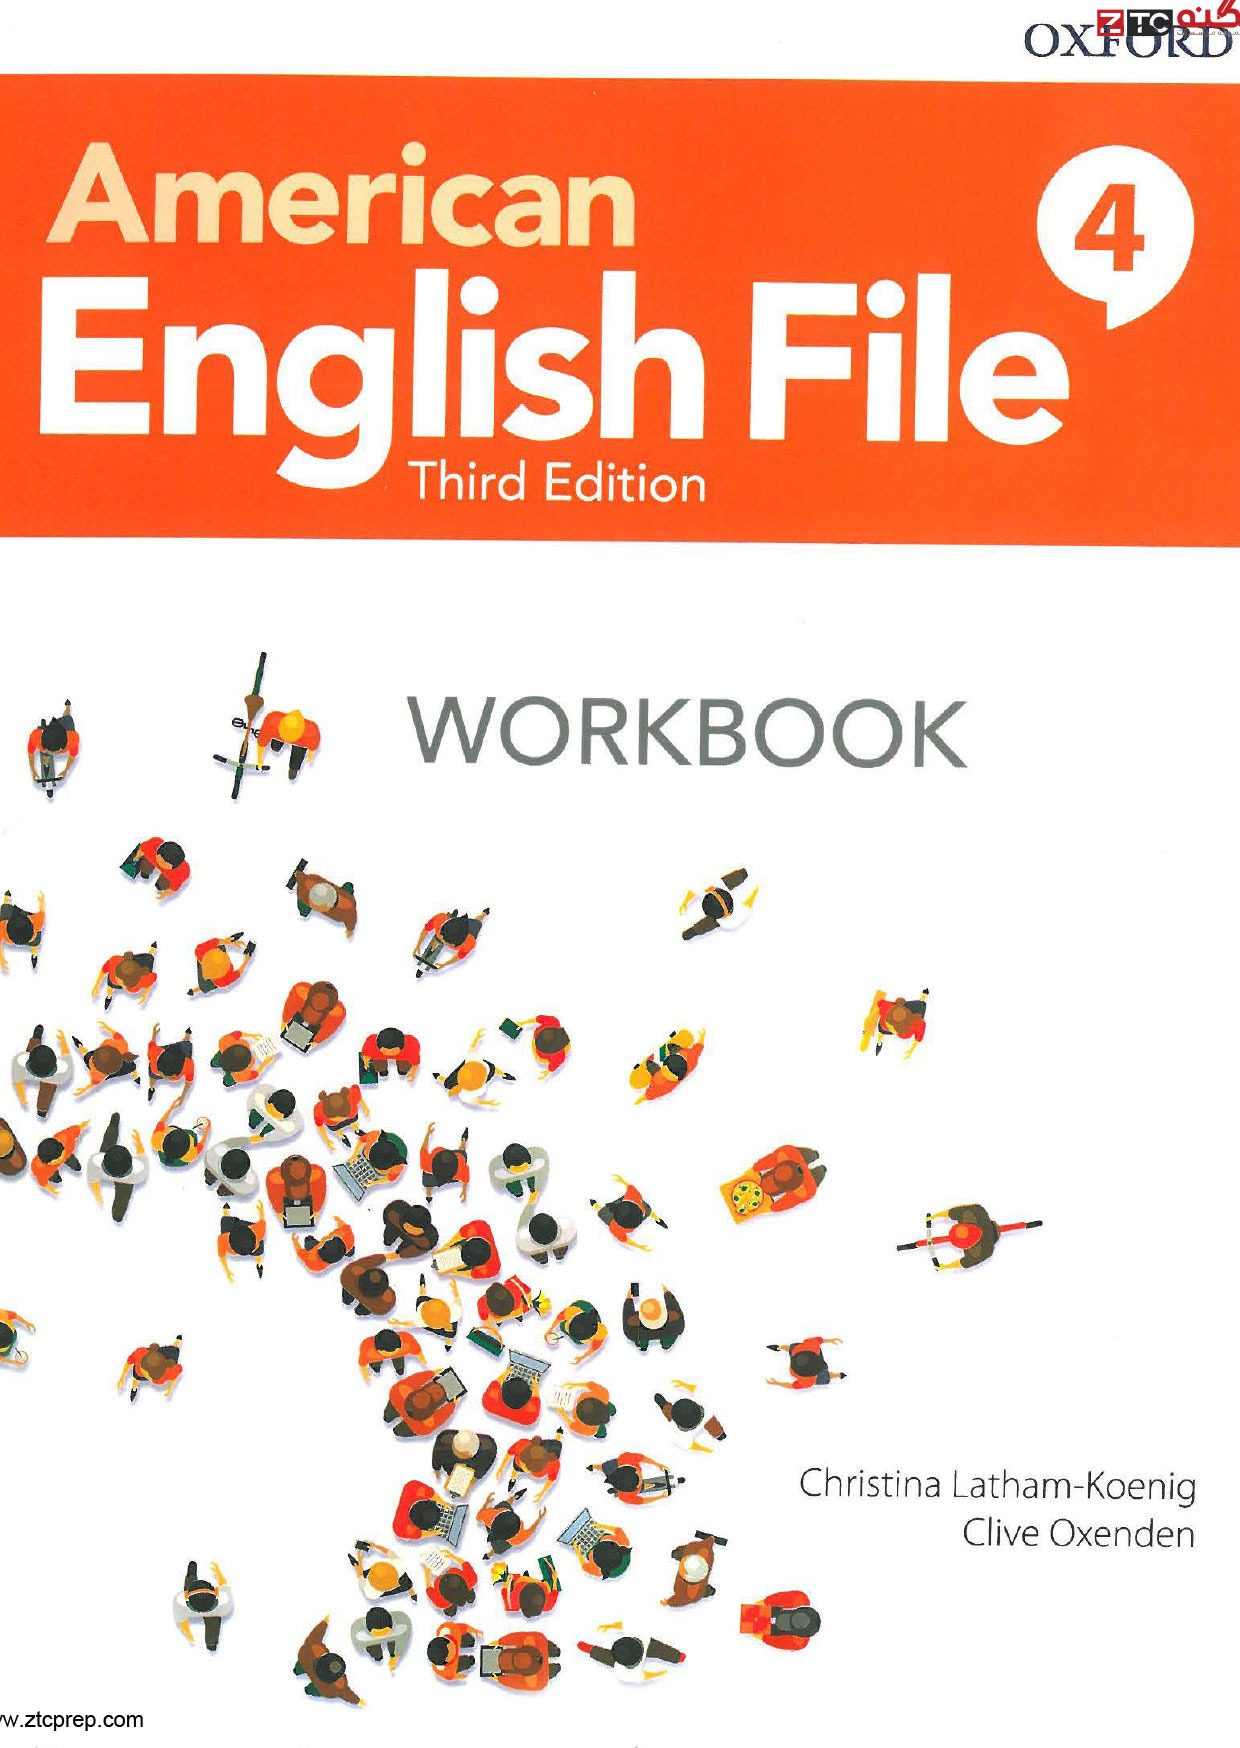 American Englis File 4 Work Book ویرایش سوم